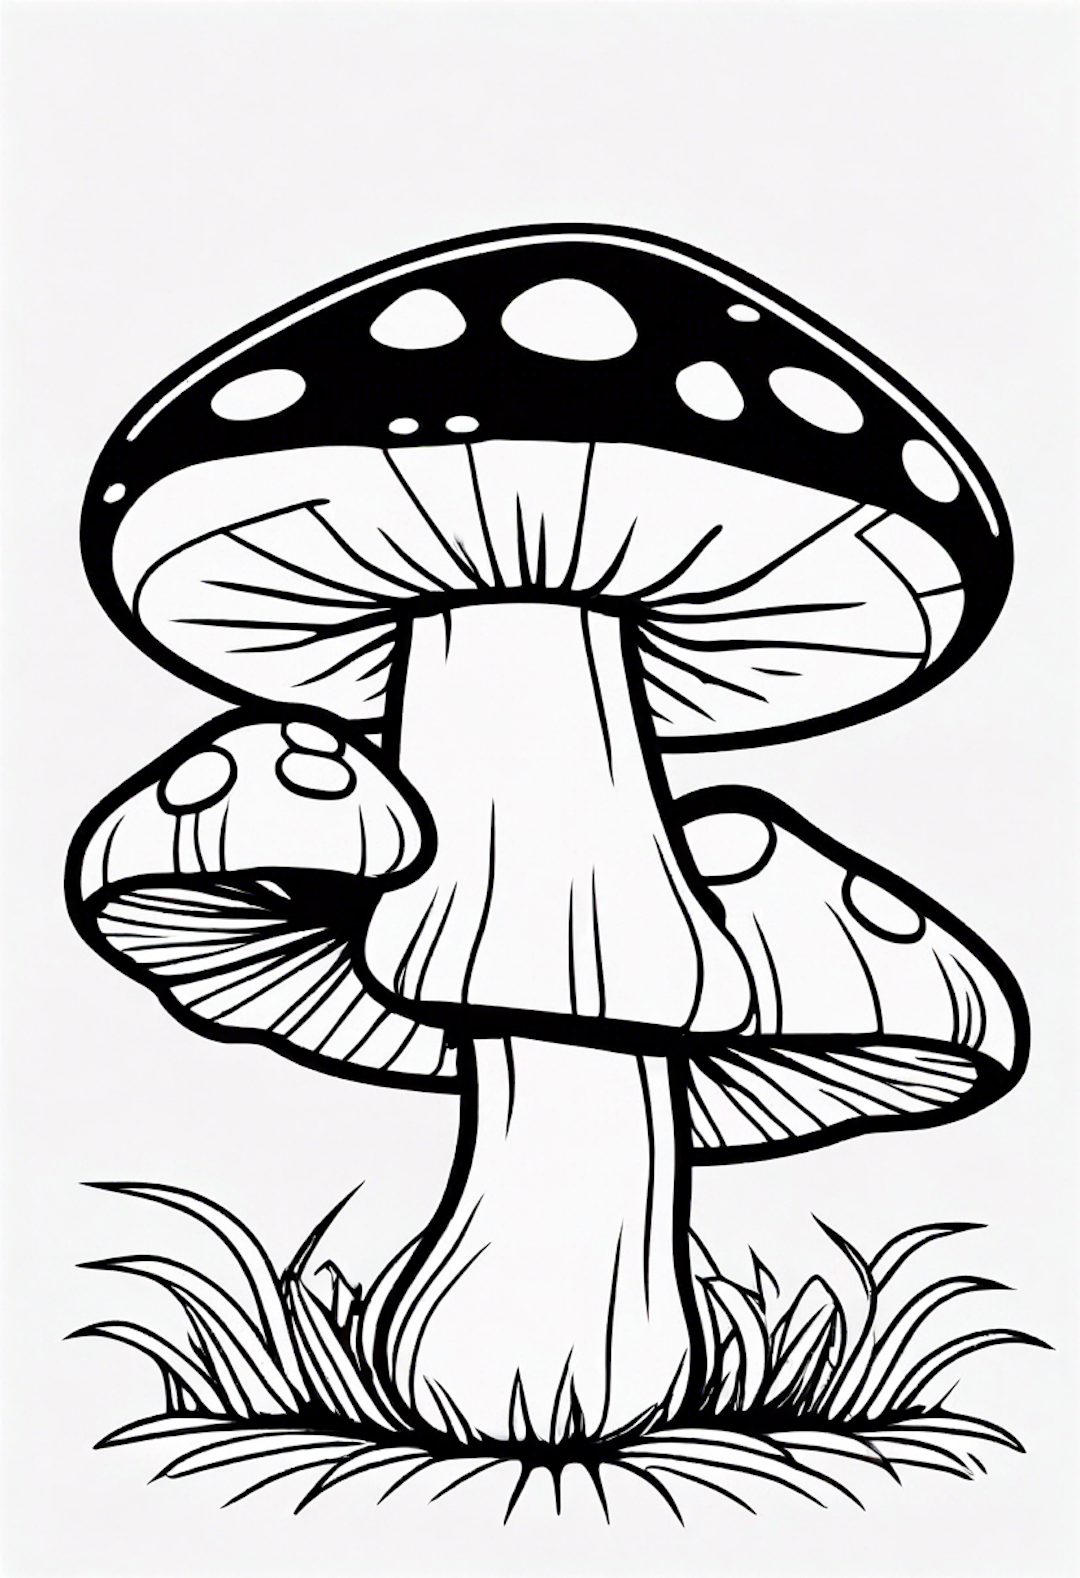 A Cartoon Mushroom Doing Yoga